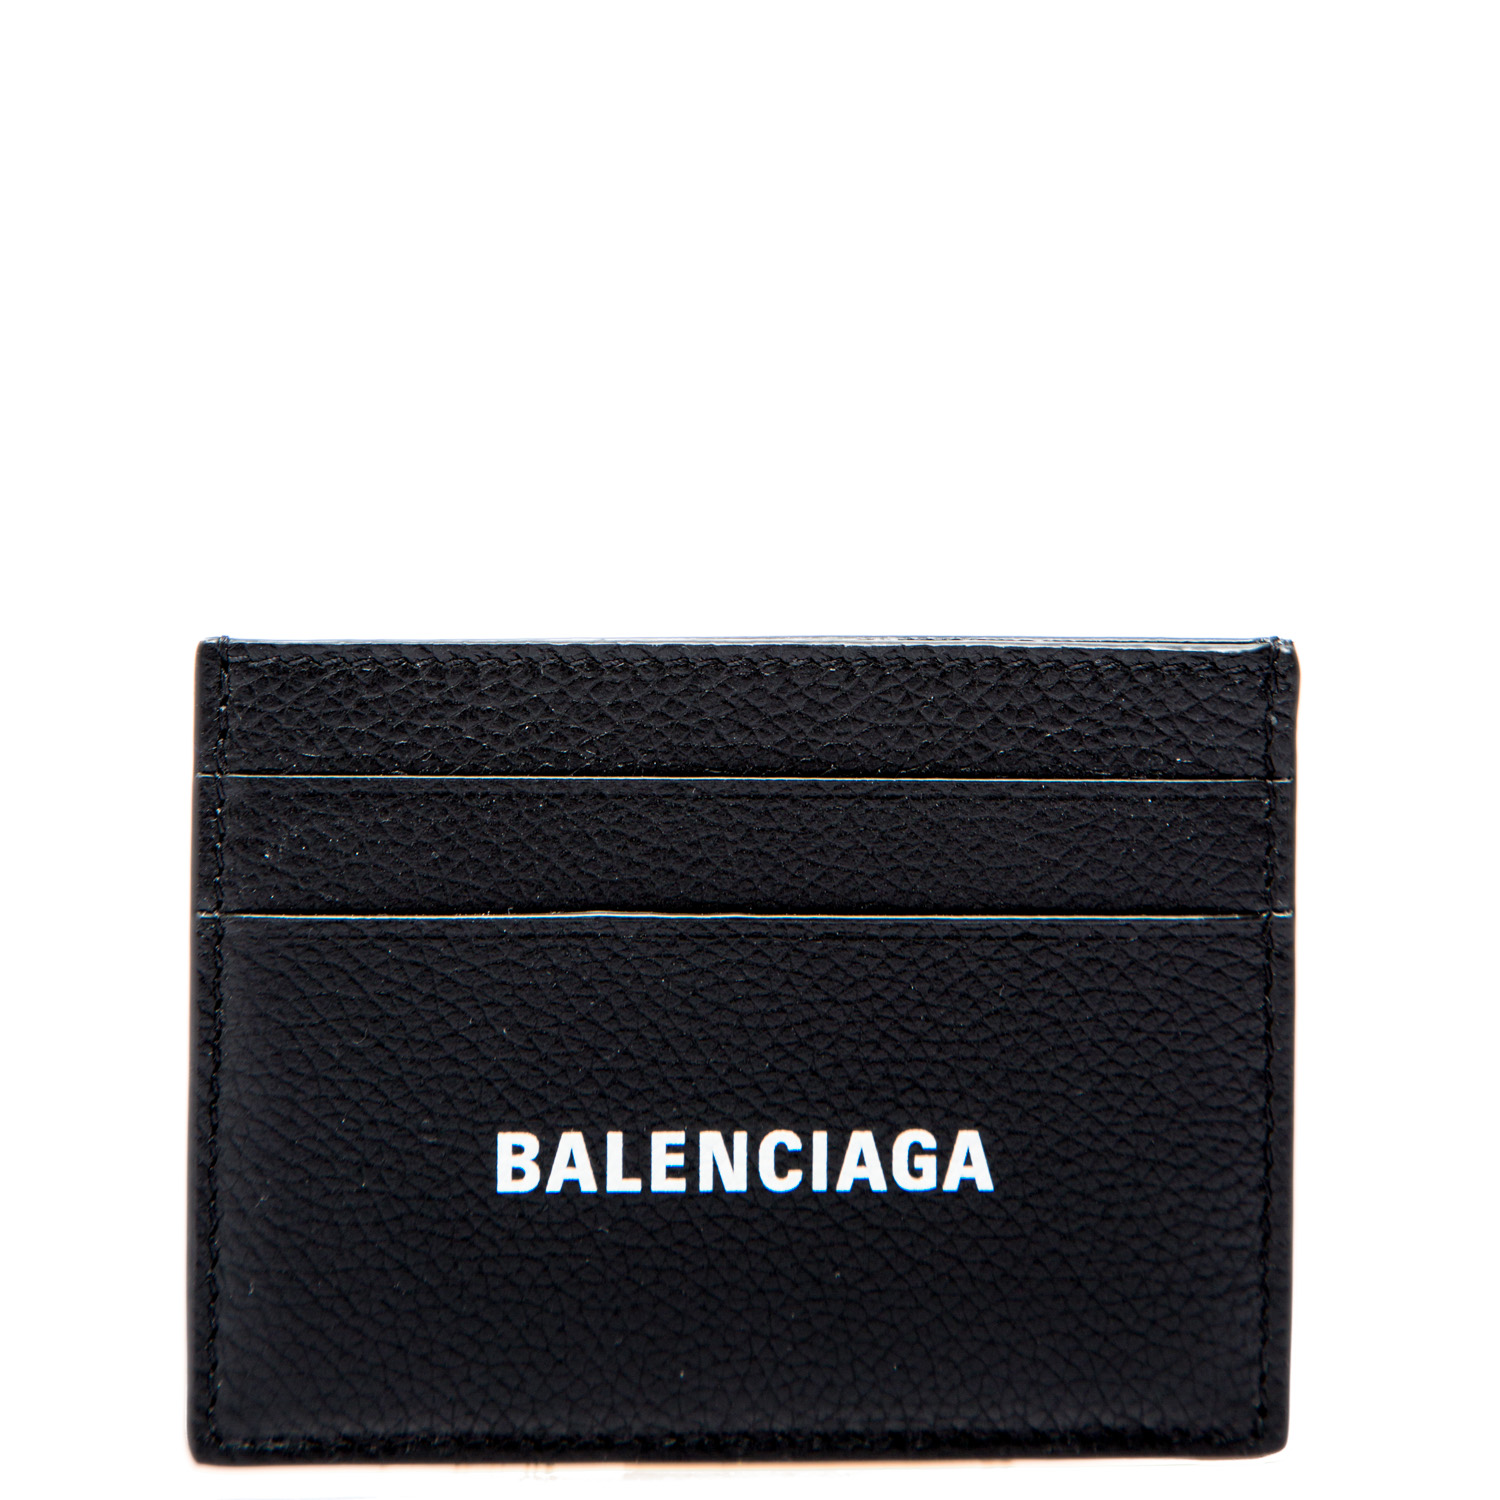 Balenciaga Credit Card Holder | Credomen